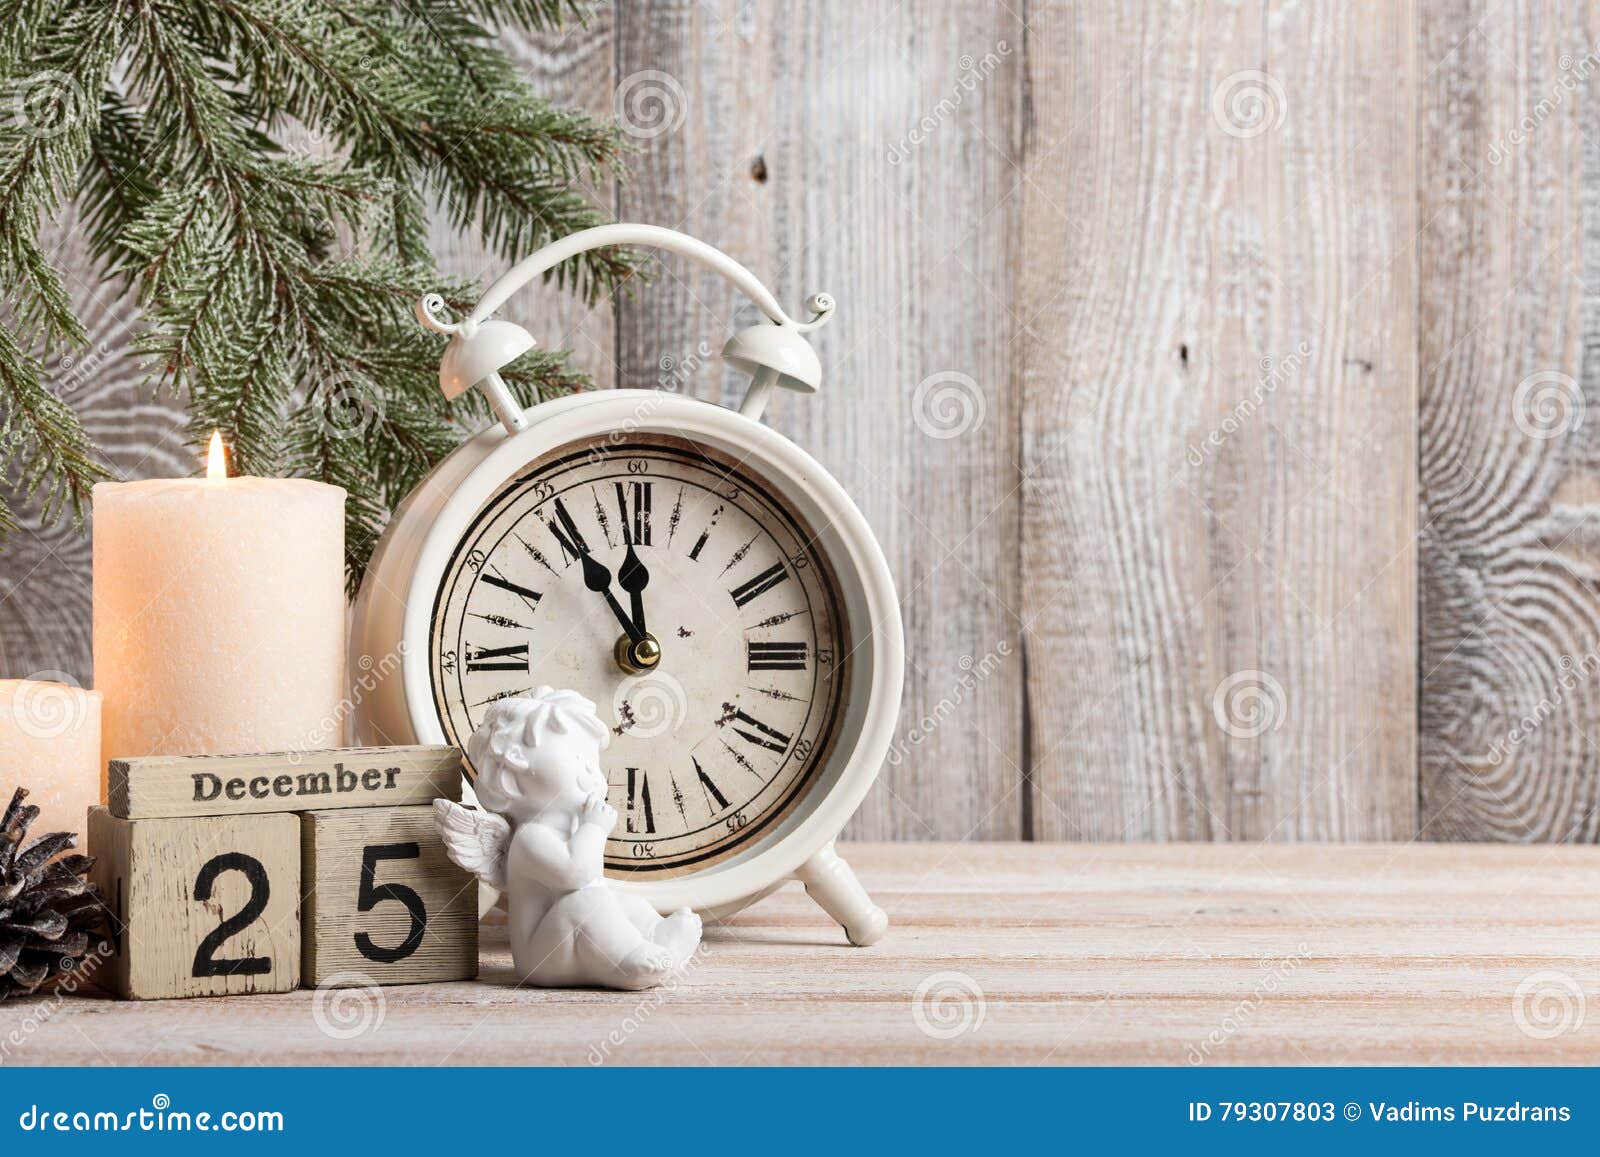 Christmas eve background stock image. Image of copy, gift - 79307803